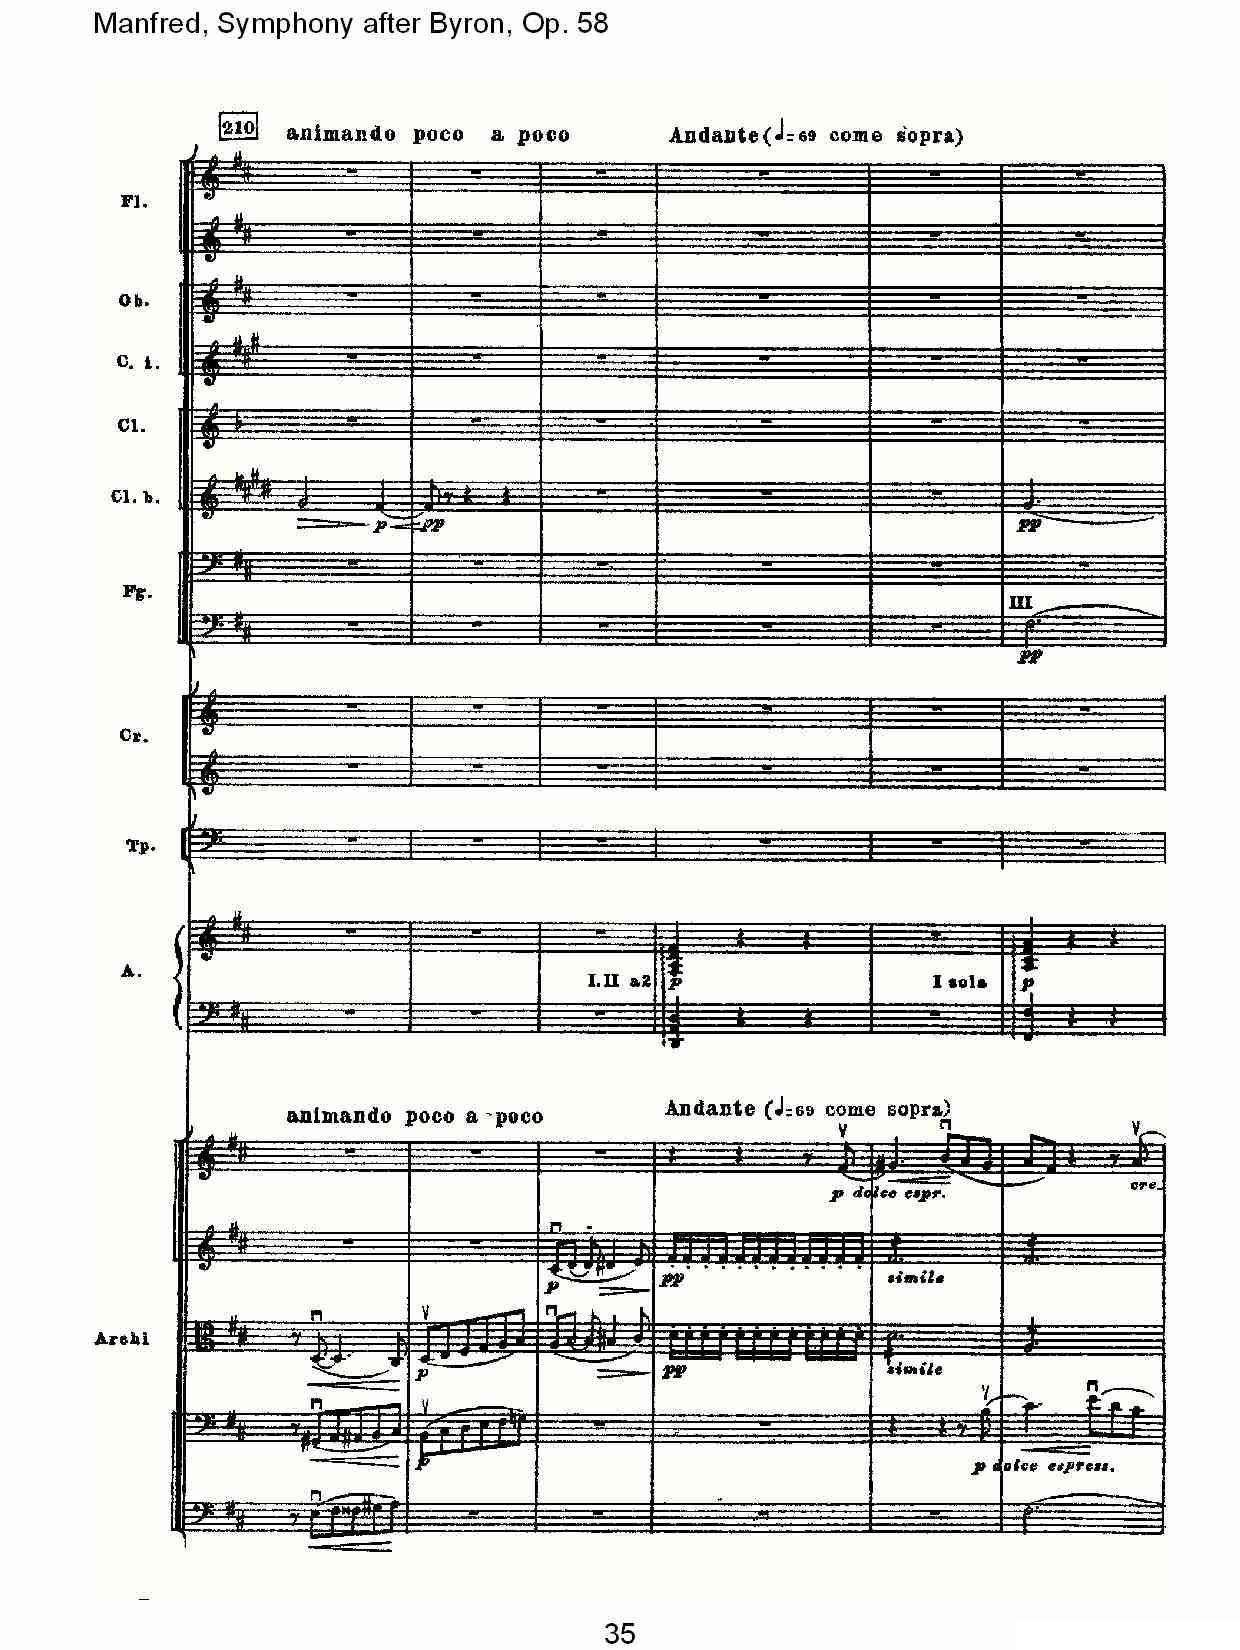 Manfred, Symphony after Byron, Op.58第一乐章（一）其它曲谱（图35）